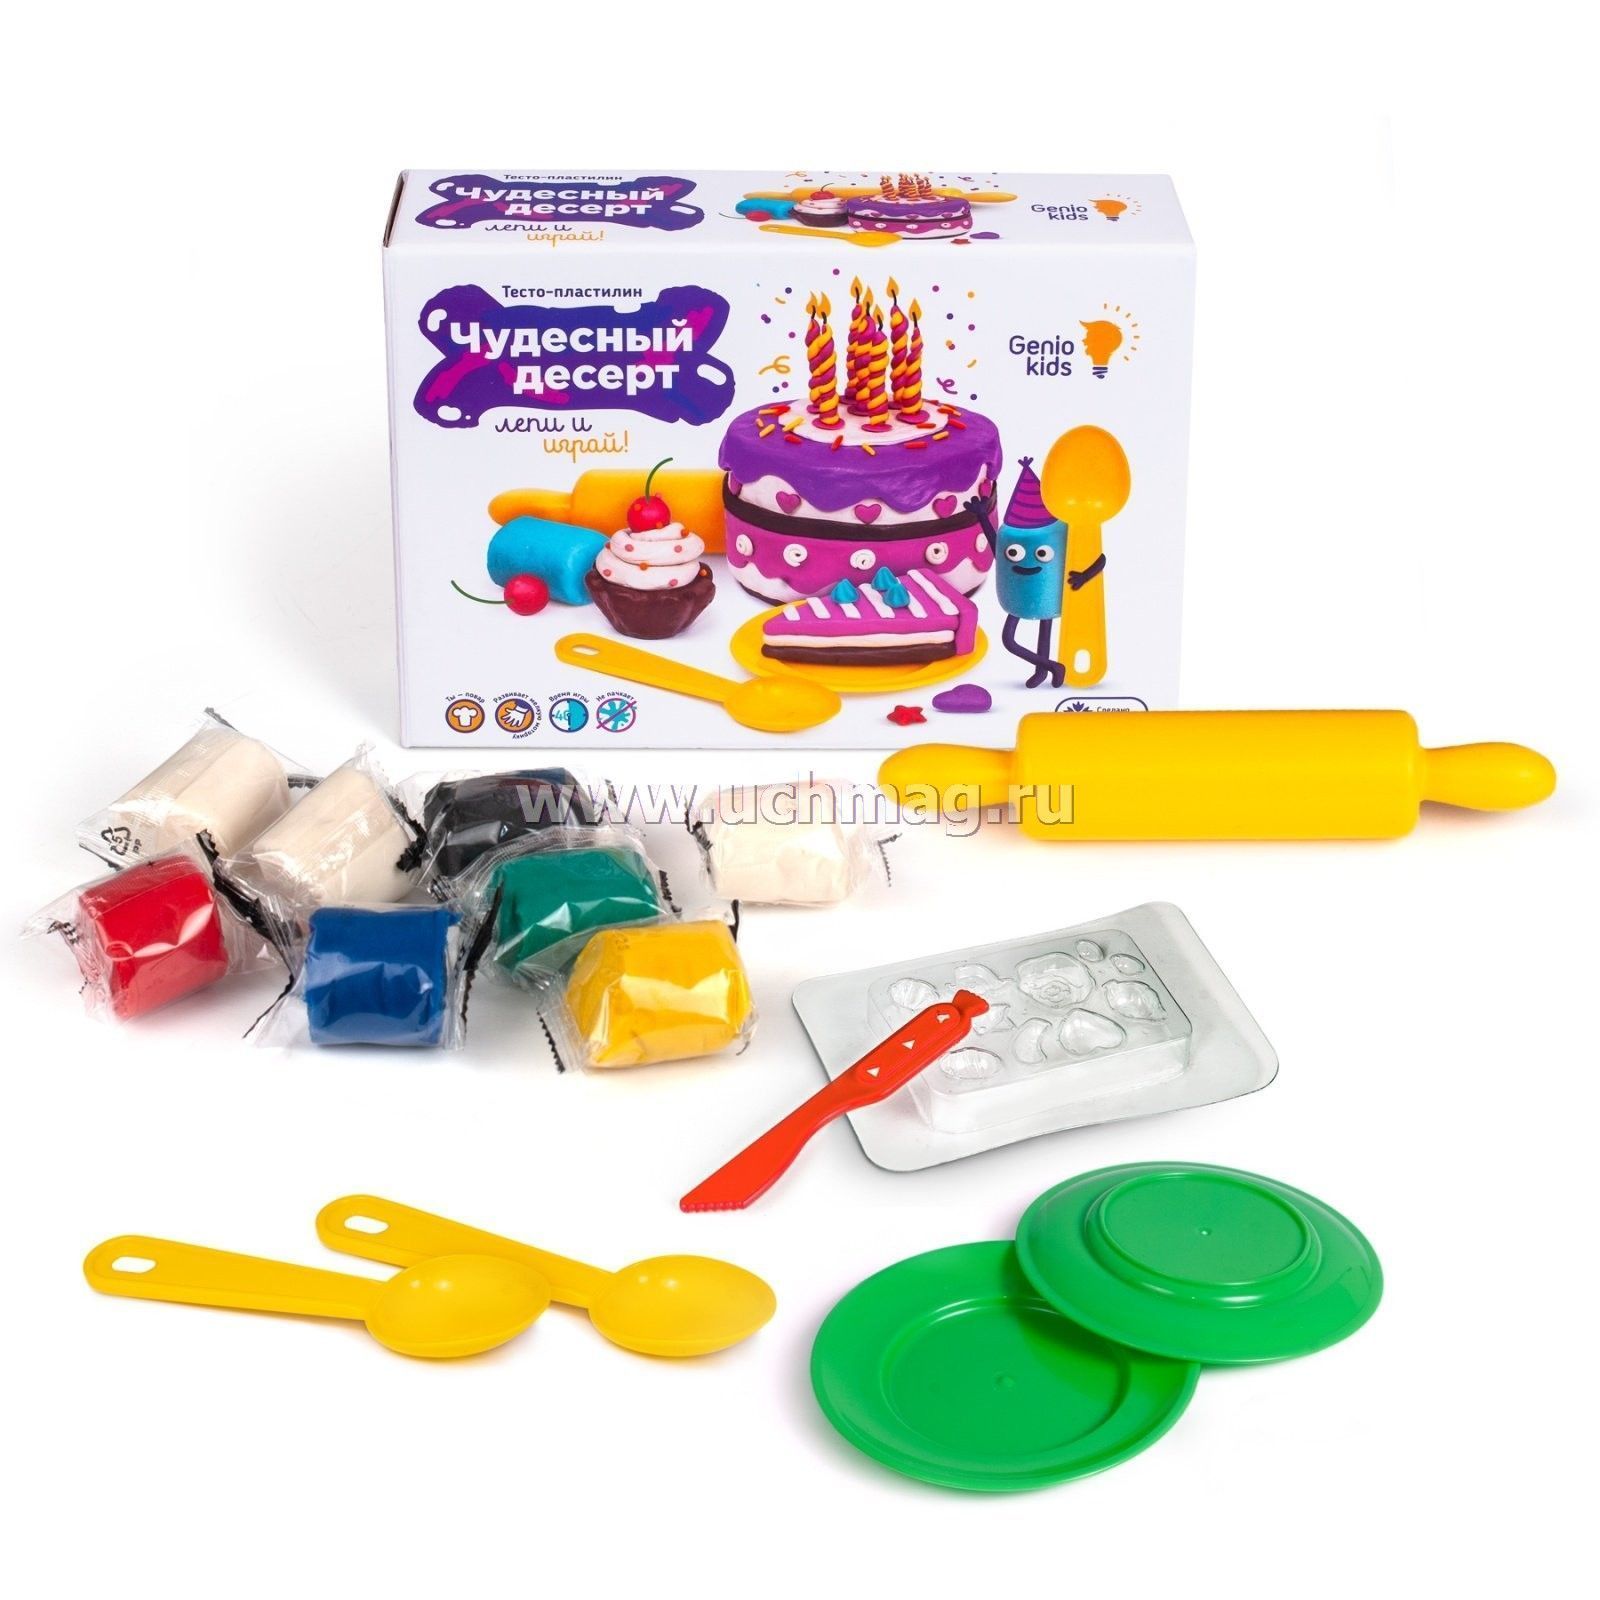 Пластилин kids. Genio Kids набор для лепки. Genio Kids чудесный десерт. Тесто для лепки Genio Kids. Пластилин тесто для лепки для детей.